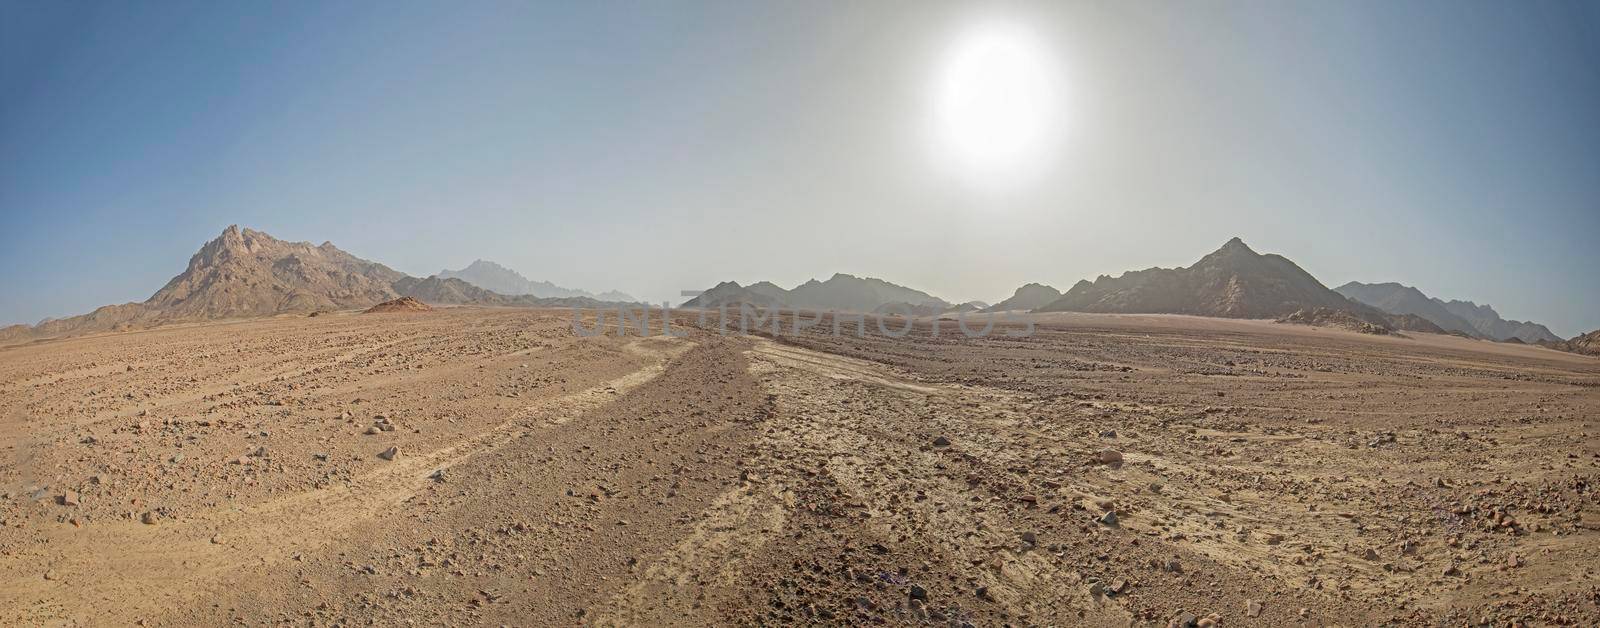 Barren rocky desert landscape in hot climate by paulvinten